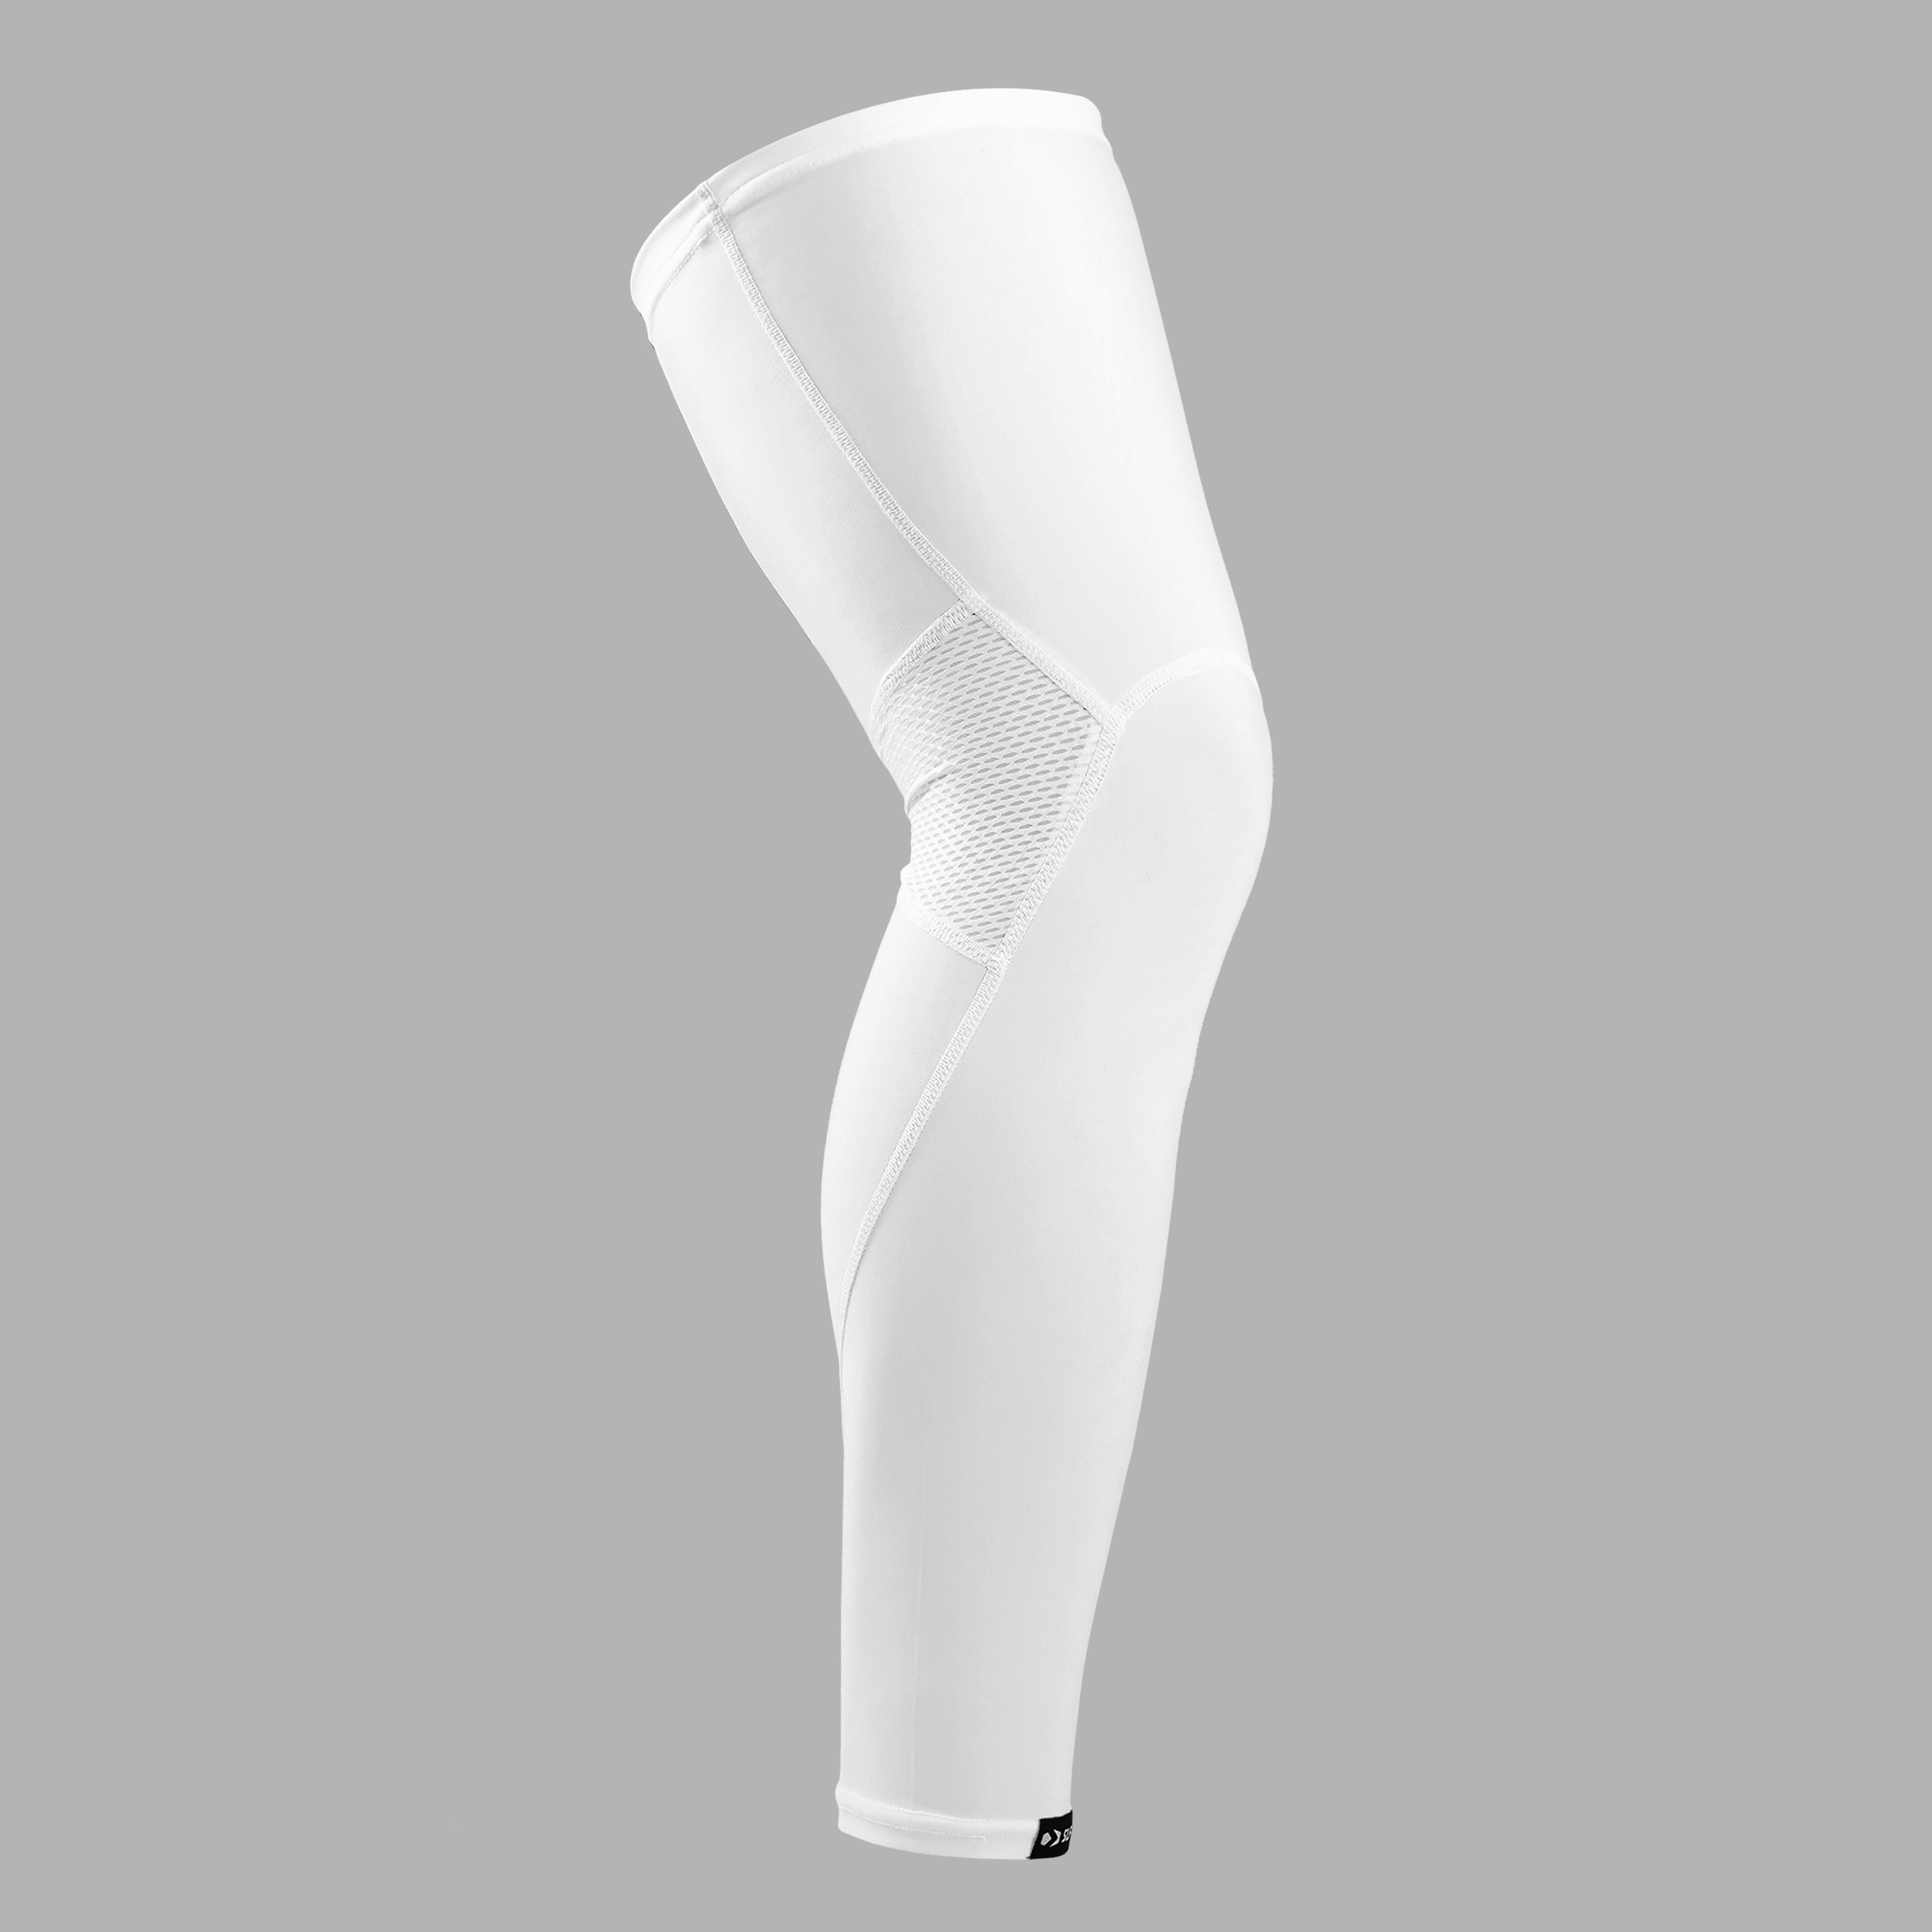  Sportlast Compression Basketball Calf Sleeve, White